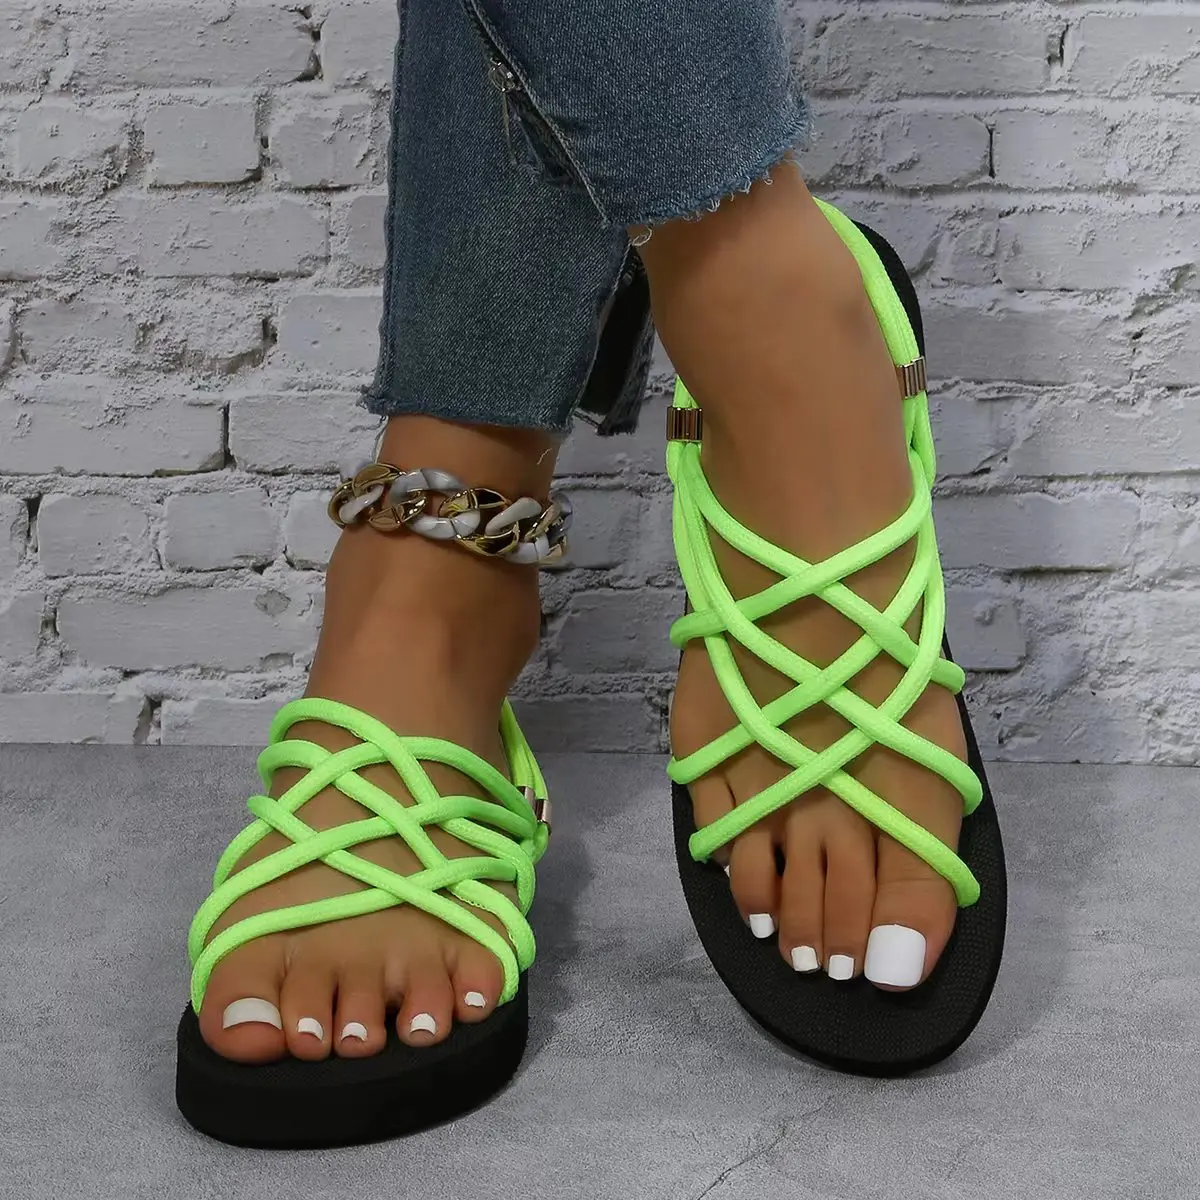 

2022 Summer Rope Sandals Shoes Woman Casual Braided with Traditional Creativity Fashion Flats Sandal Women Beach Shoes Sandalias, Multi black/ multi peach